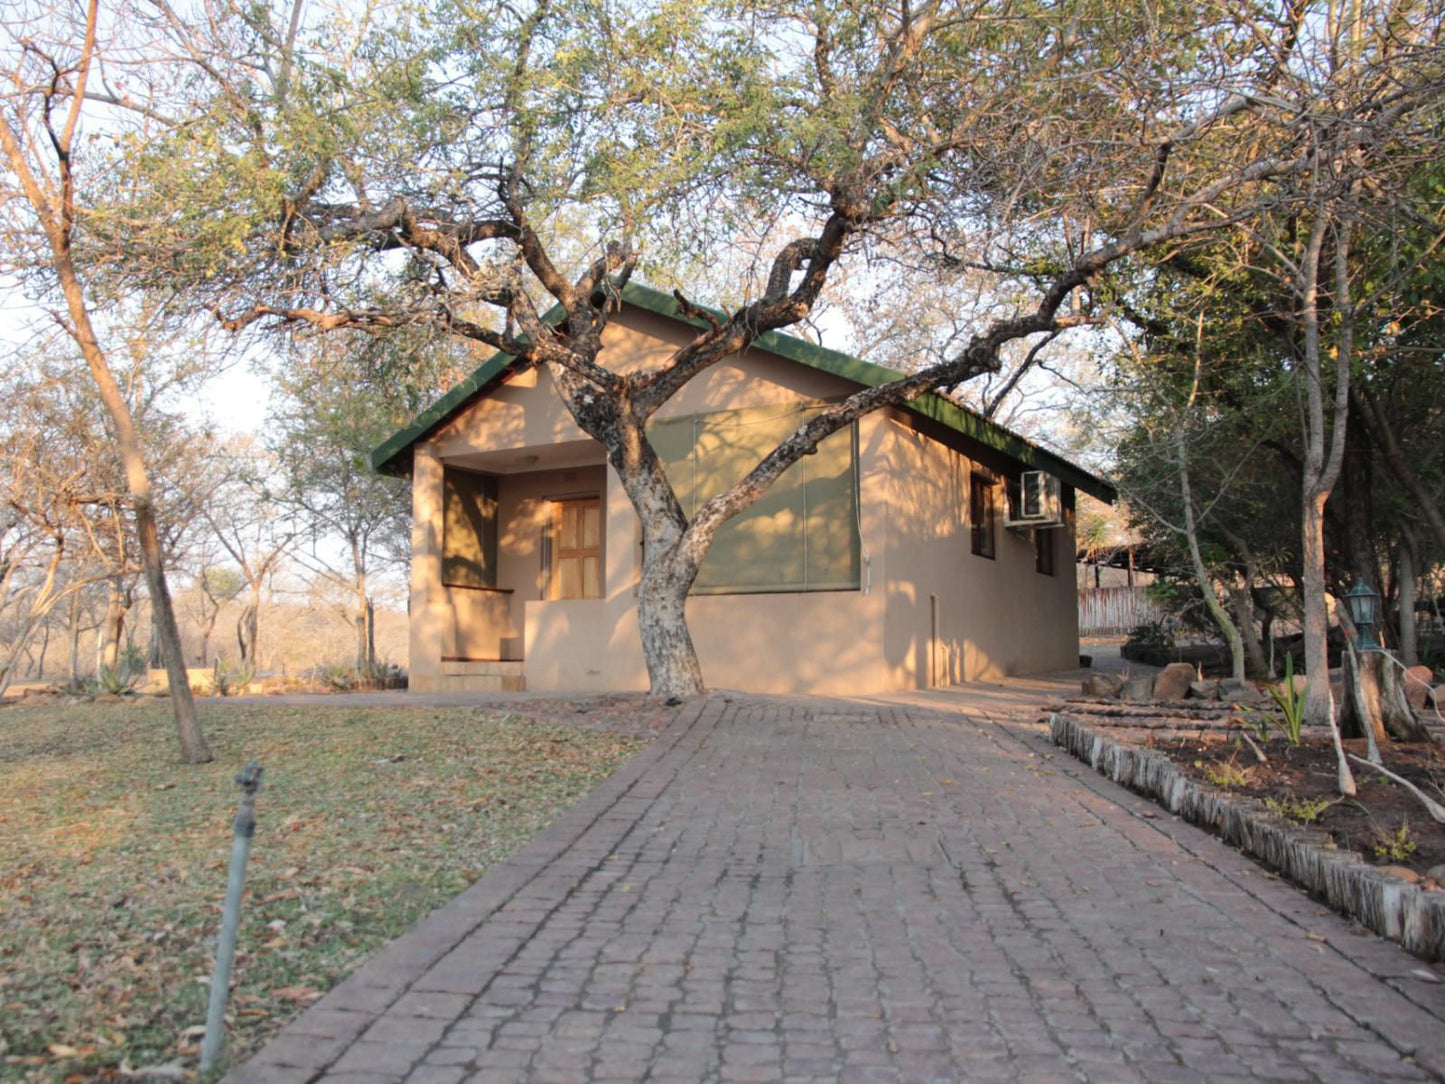 Chama Game Lodge Malelane Mpumalanga South Africa House, Building, Architecture